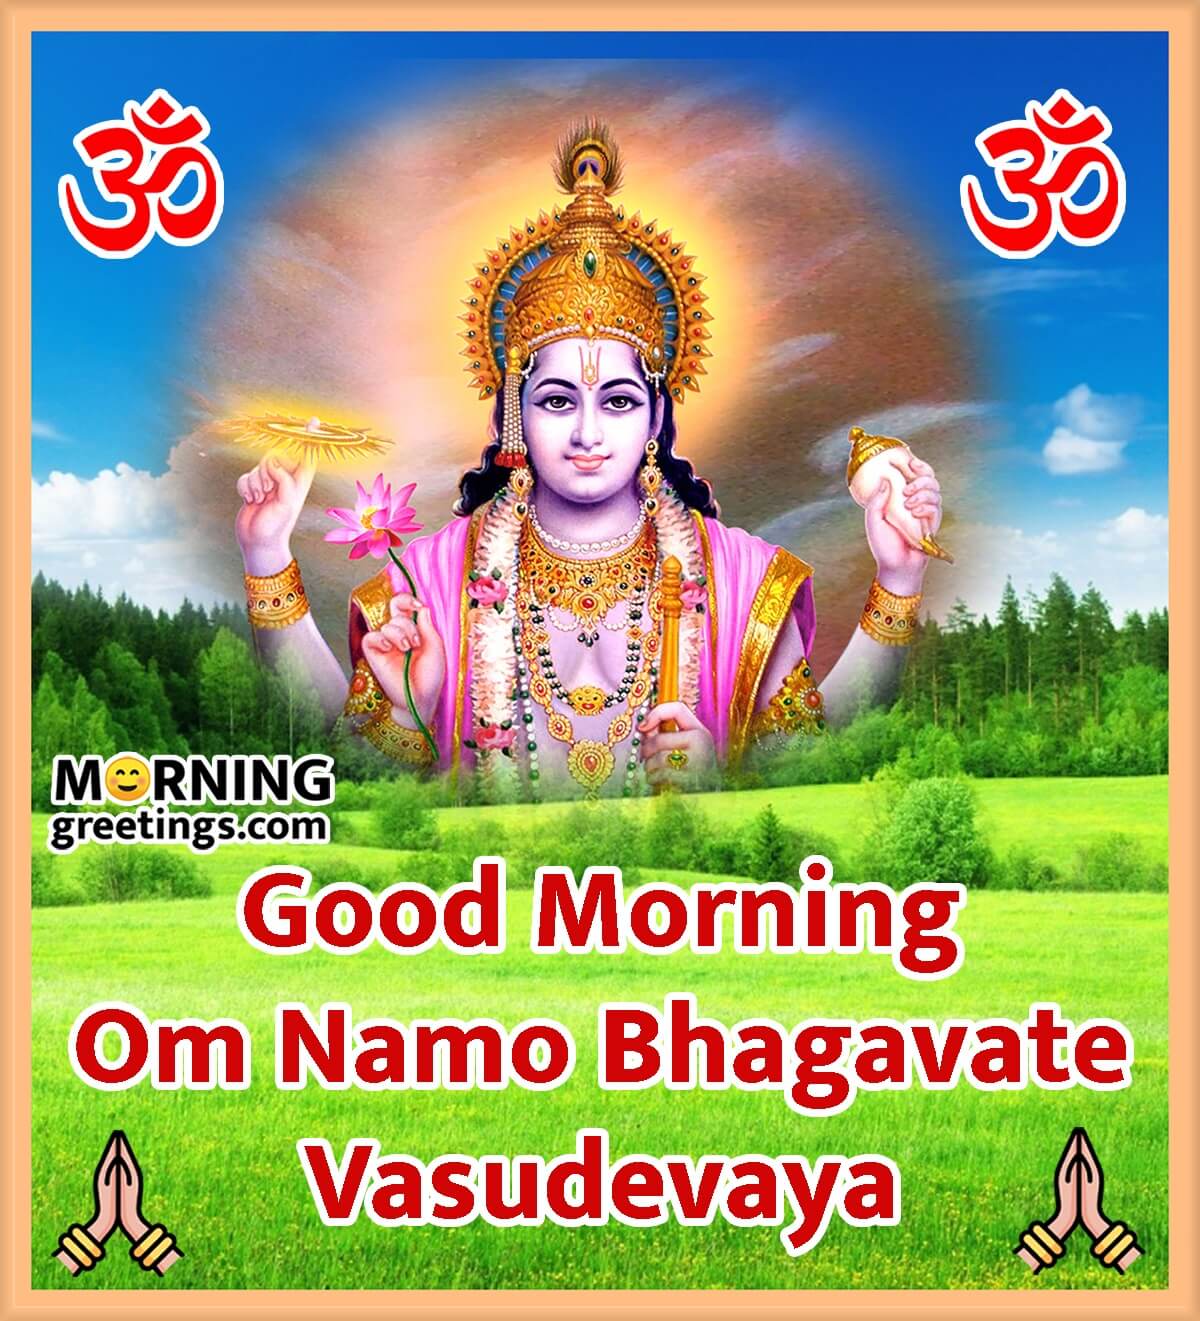 Good Morning Om Namo Bhagwate Vasudevaya